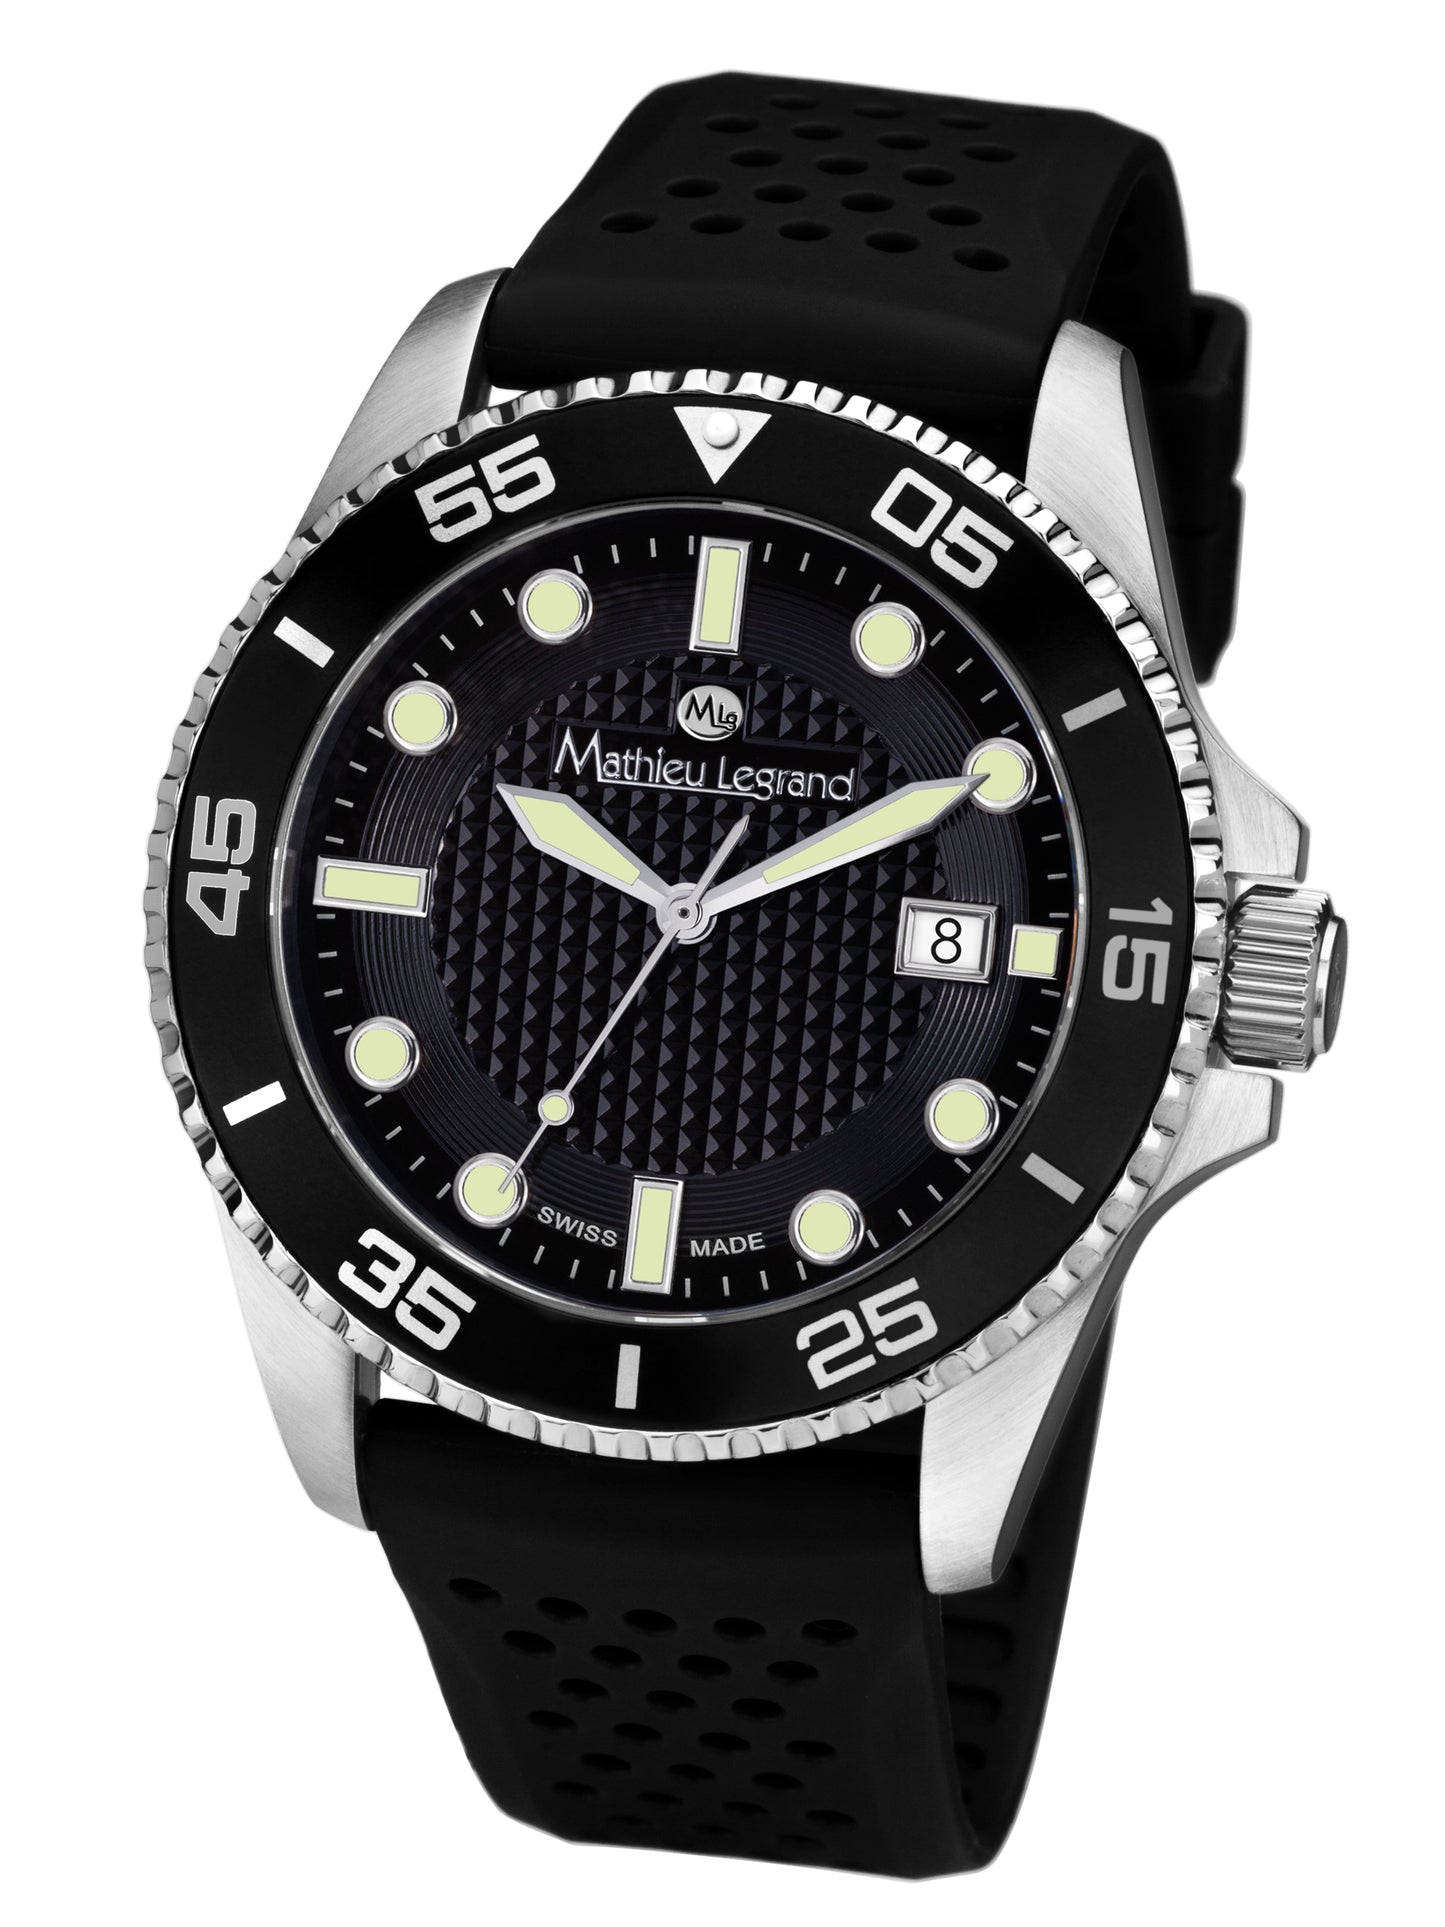 Automatic watches — Marin — Mathieu Legrand — steel black